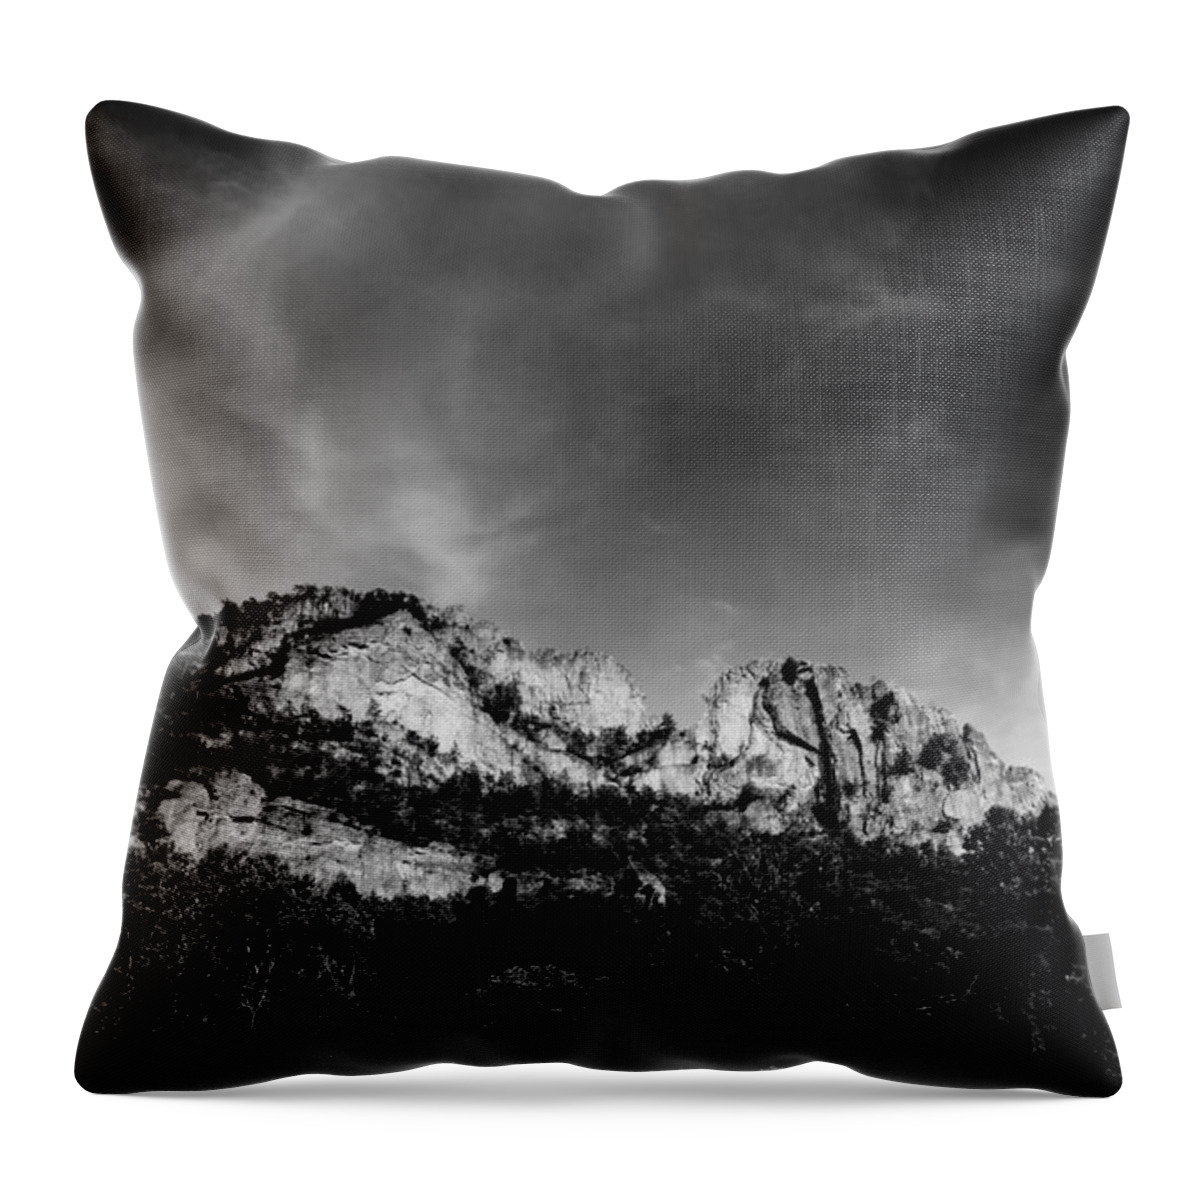 Seneca Rocks Throw Pillow featuring the photograph Seneca Rocks by Shane Holsclaw